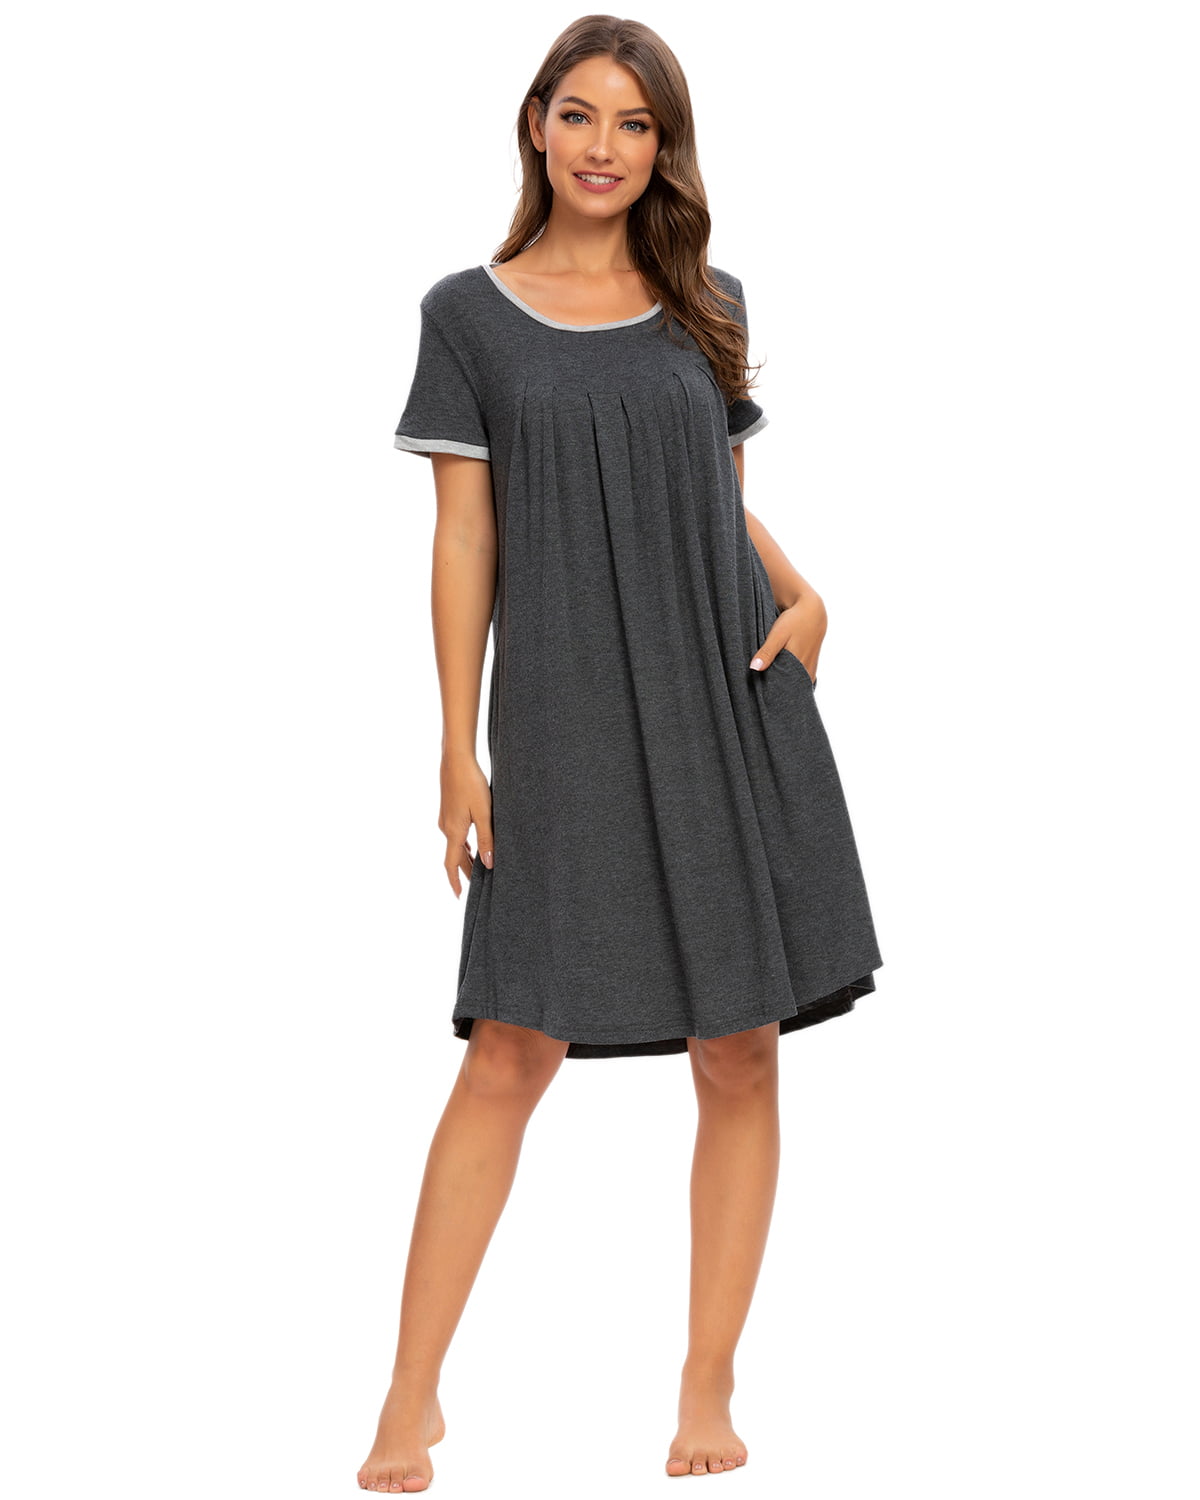 MINTLIMIT Womens Nightdresses Round Neck Sleepwear Short Sleeve Casual Nightshirt Sleep Shirt Dress with Pockets